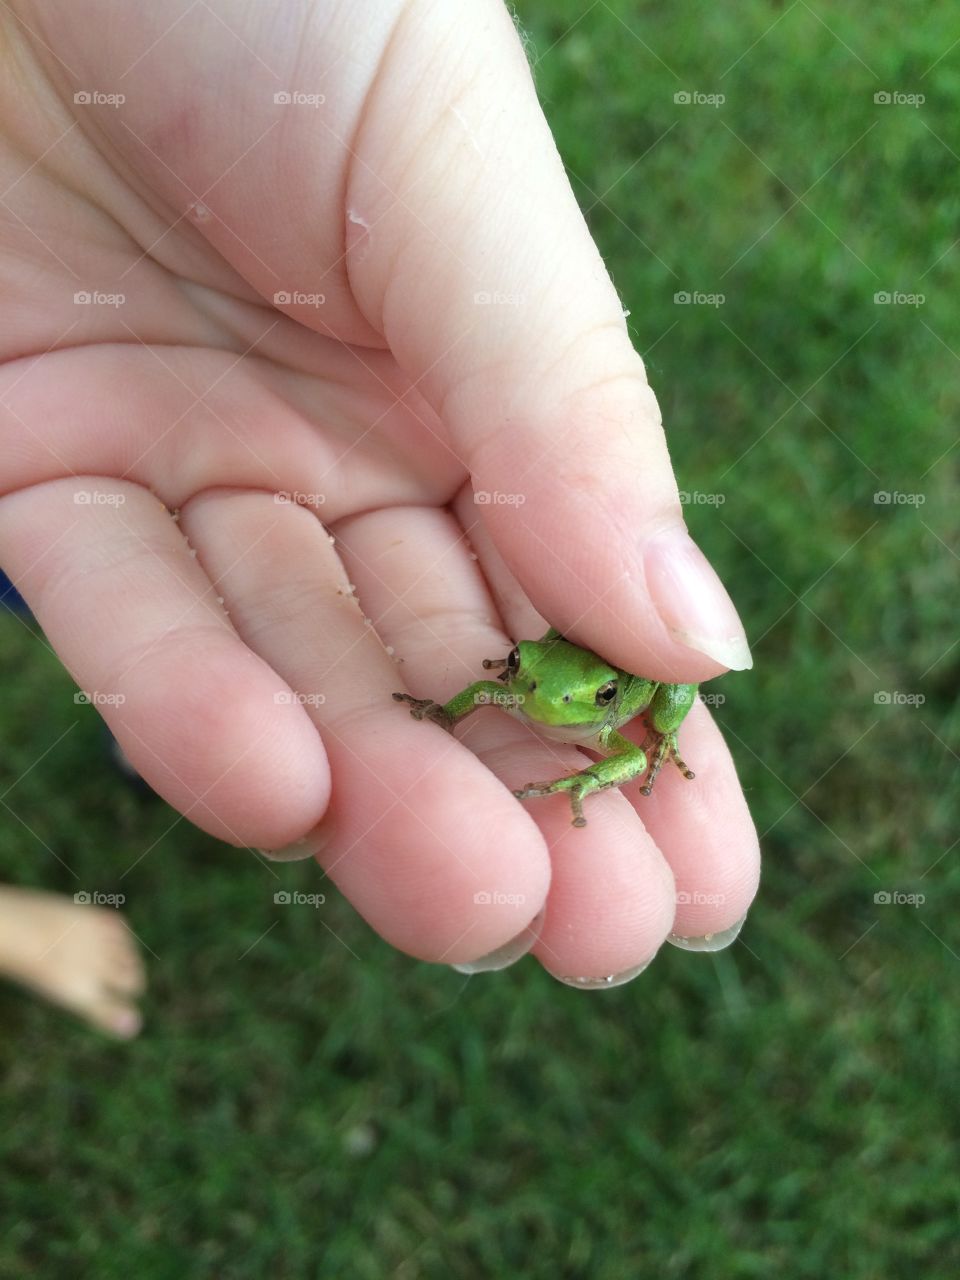 Frog. Frog